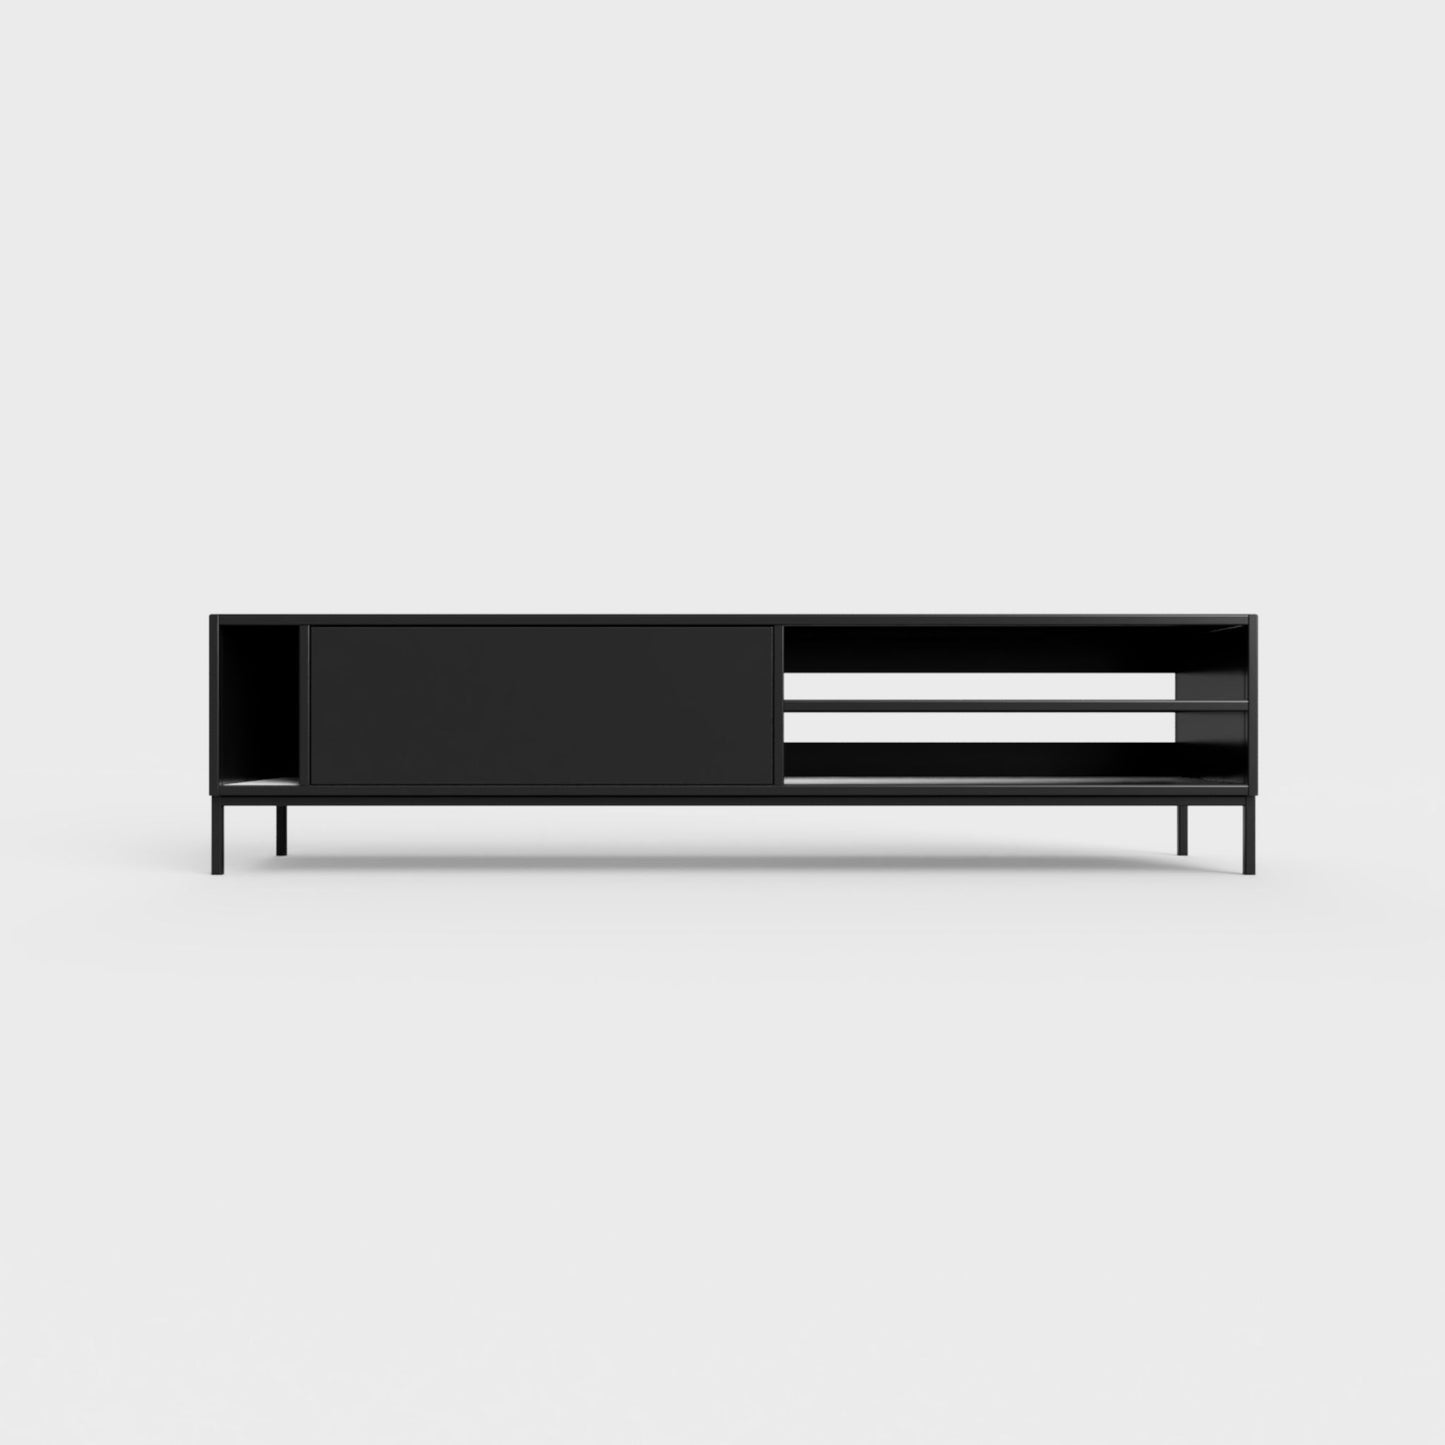 Prunus 03 Lowboard in black color, powder-coated steel, elegant and modern piece of furniture for your living room